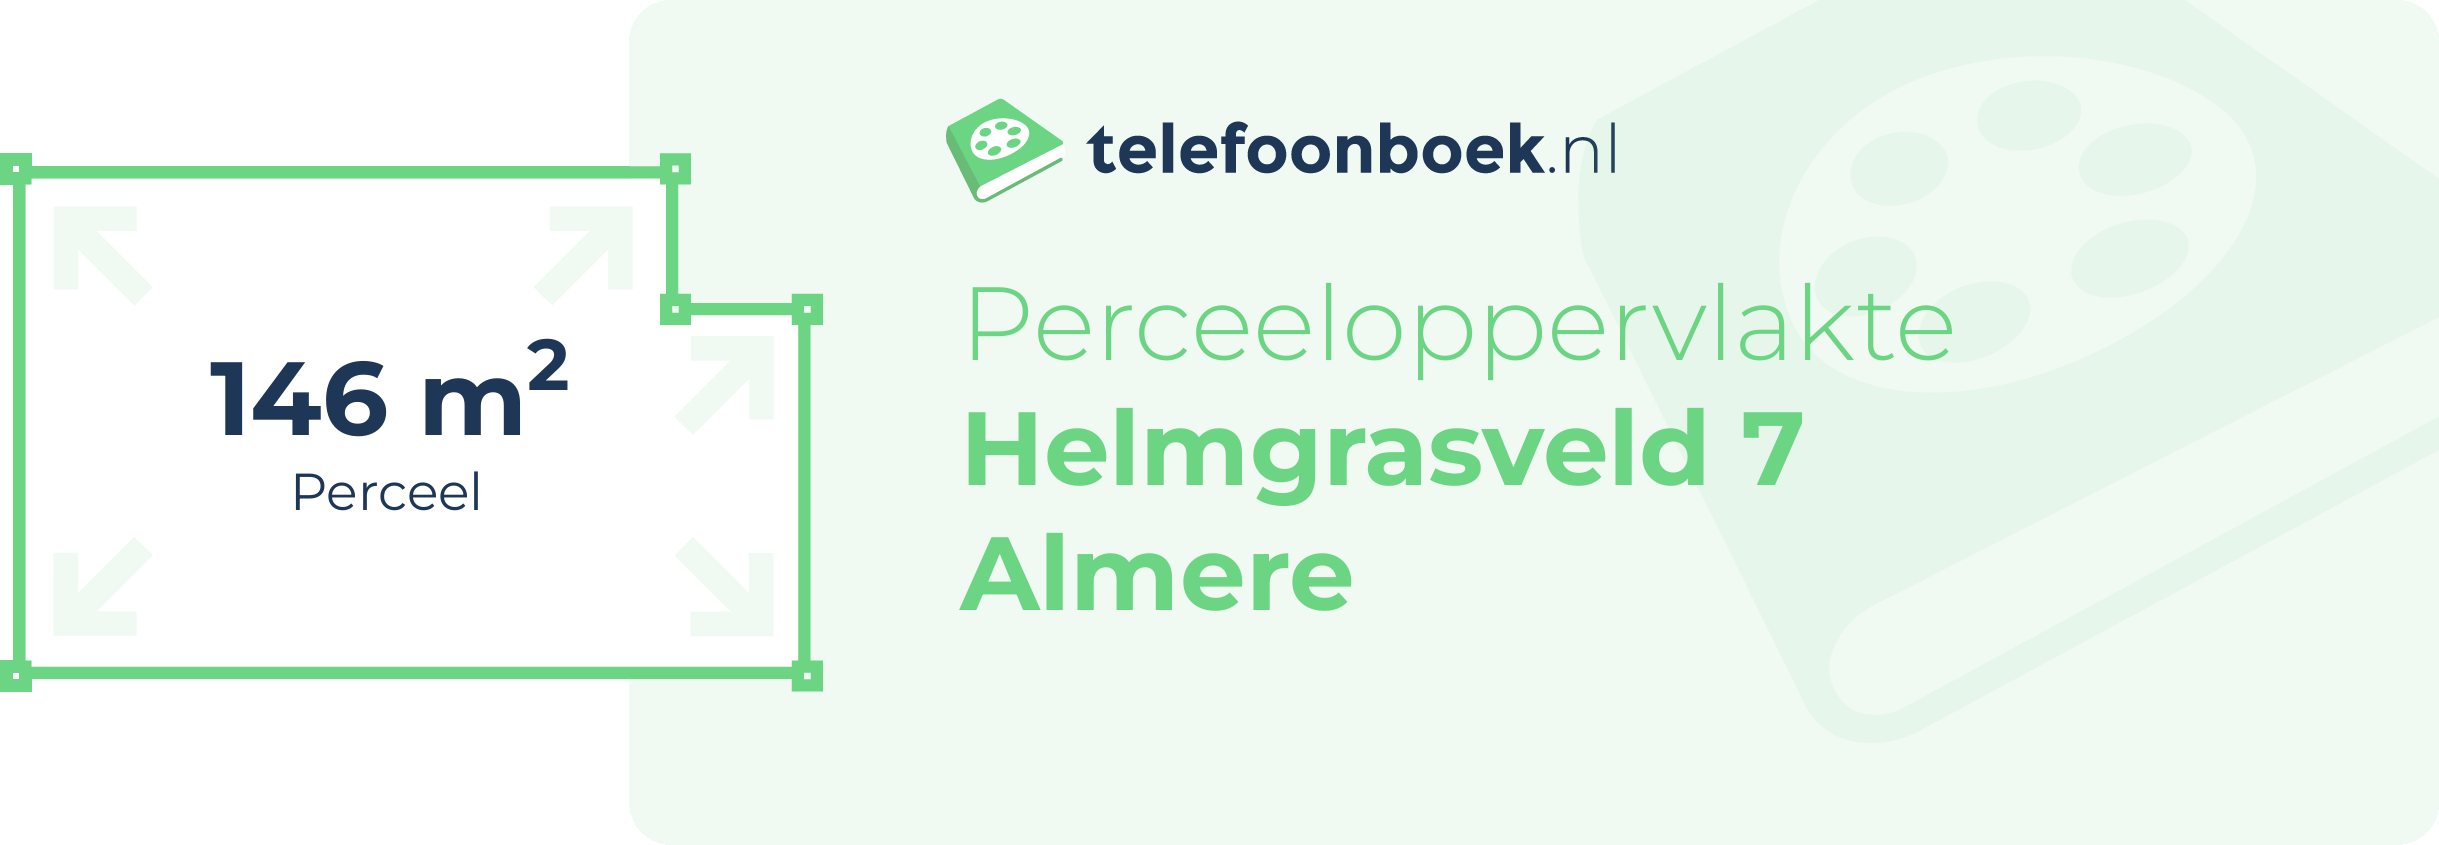 Perceeloppervlakte Helmgrasveld 7 Almere